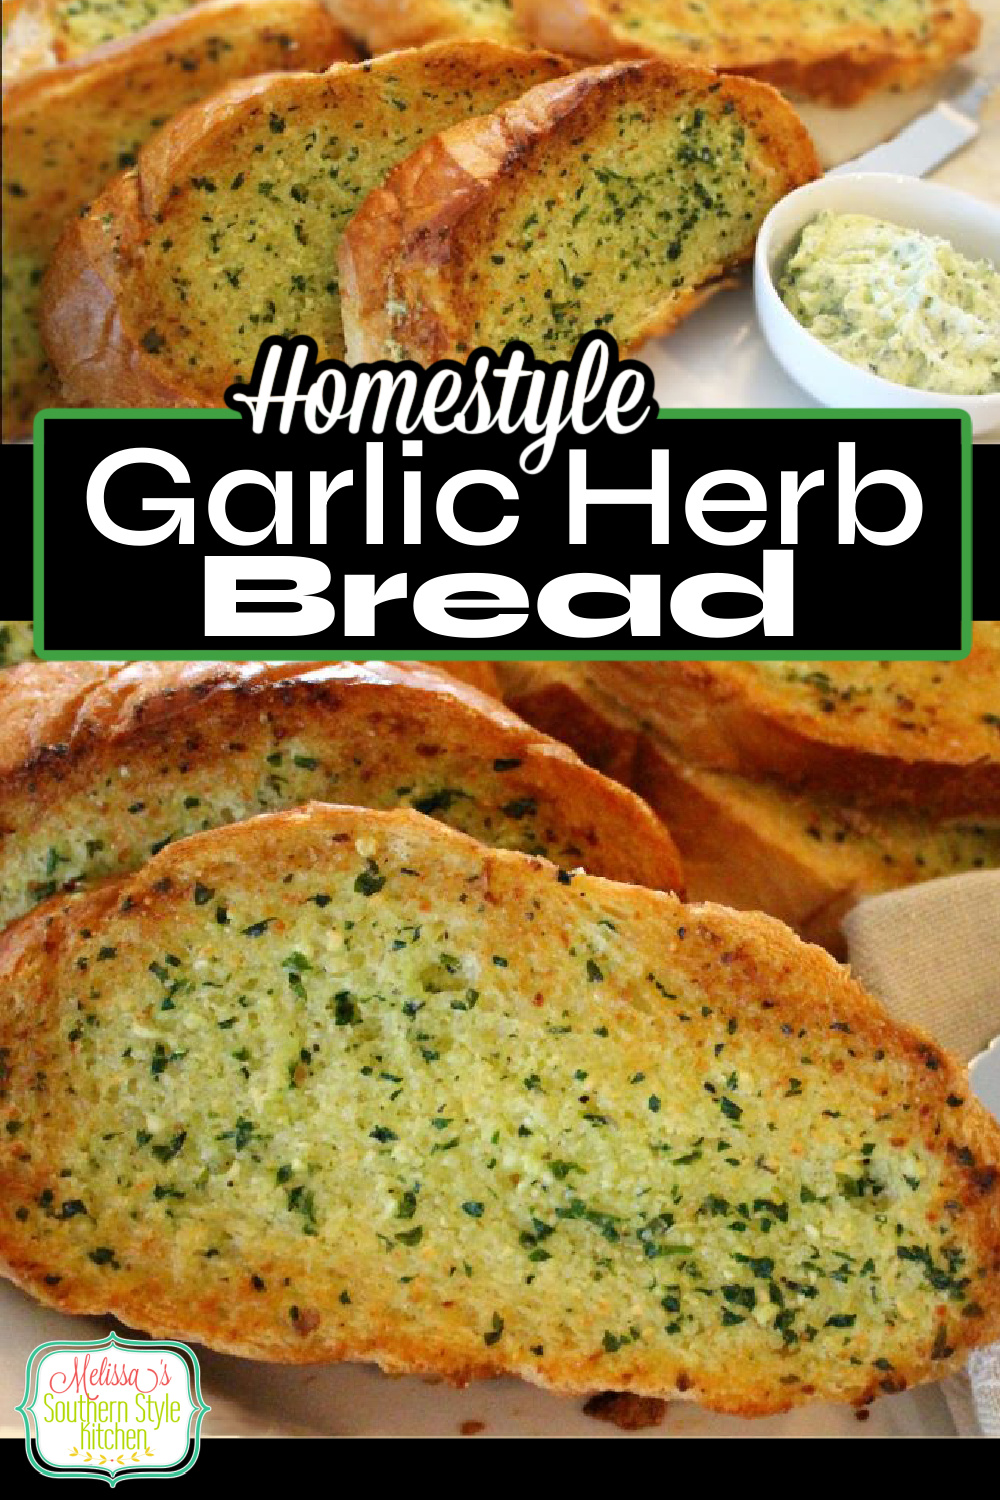 Serve this super easy Homestyle Garlic and Herb Bread at any meal #garlicbread #herbbread #breadrecipes #easygarlictoast #cheesytoastrecipes #garlicherbbread via @melissasssk